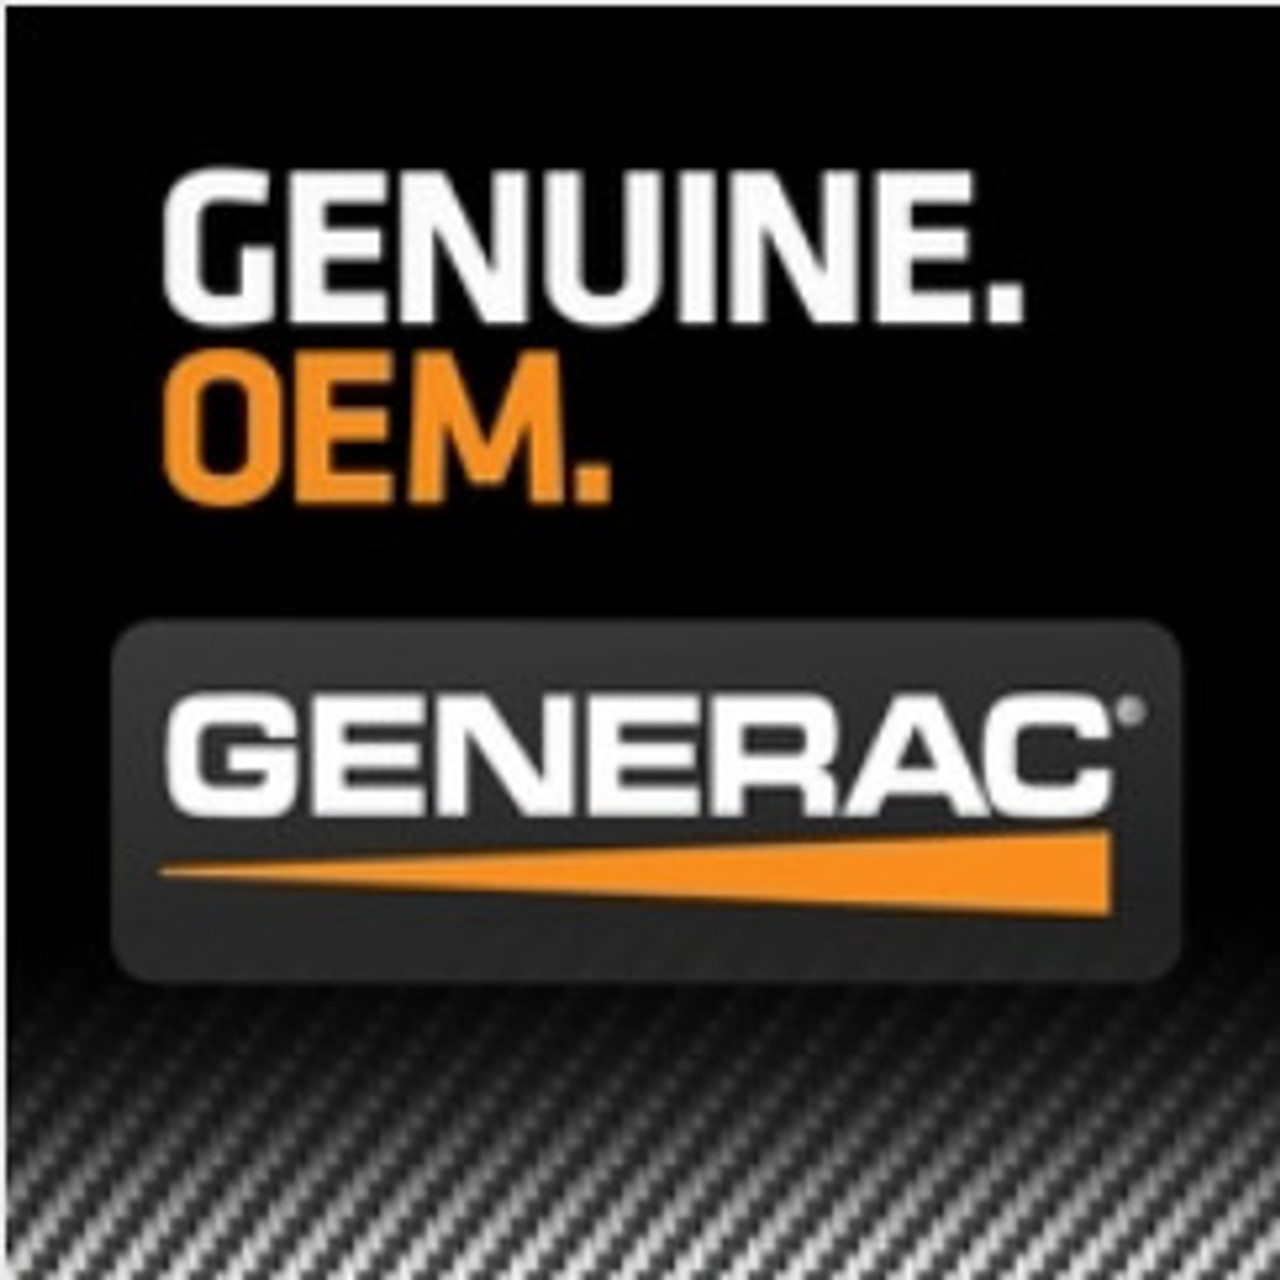 Generac Generator OEM Parts